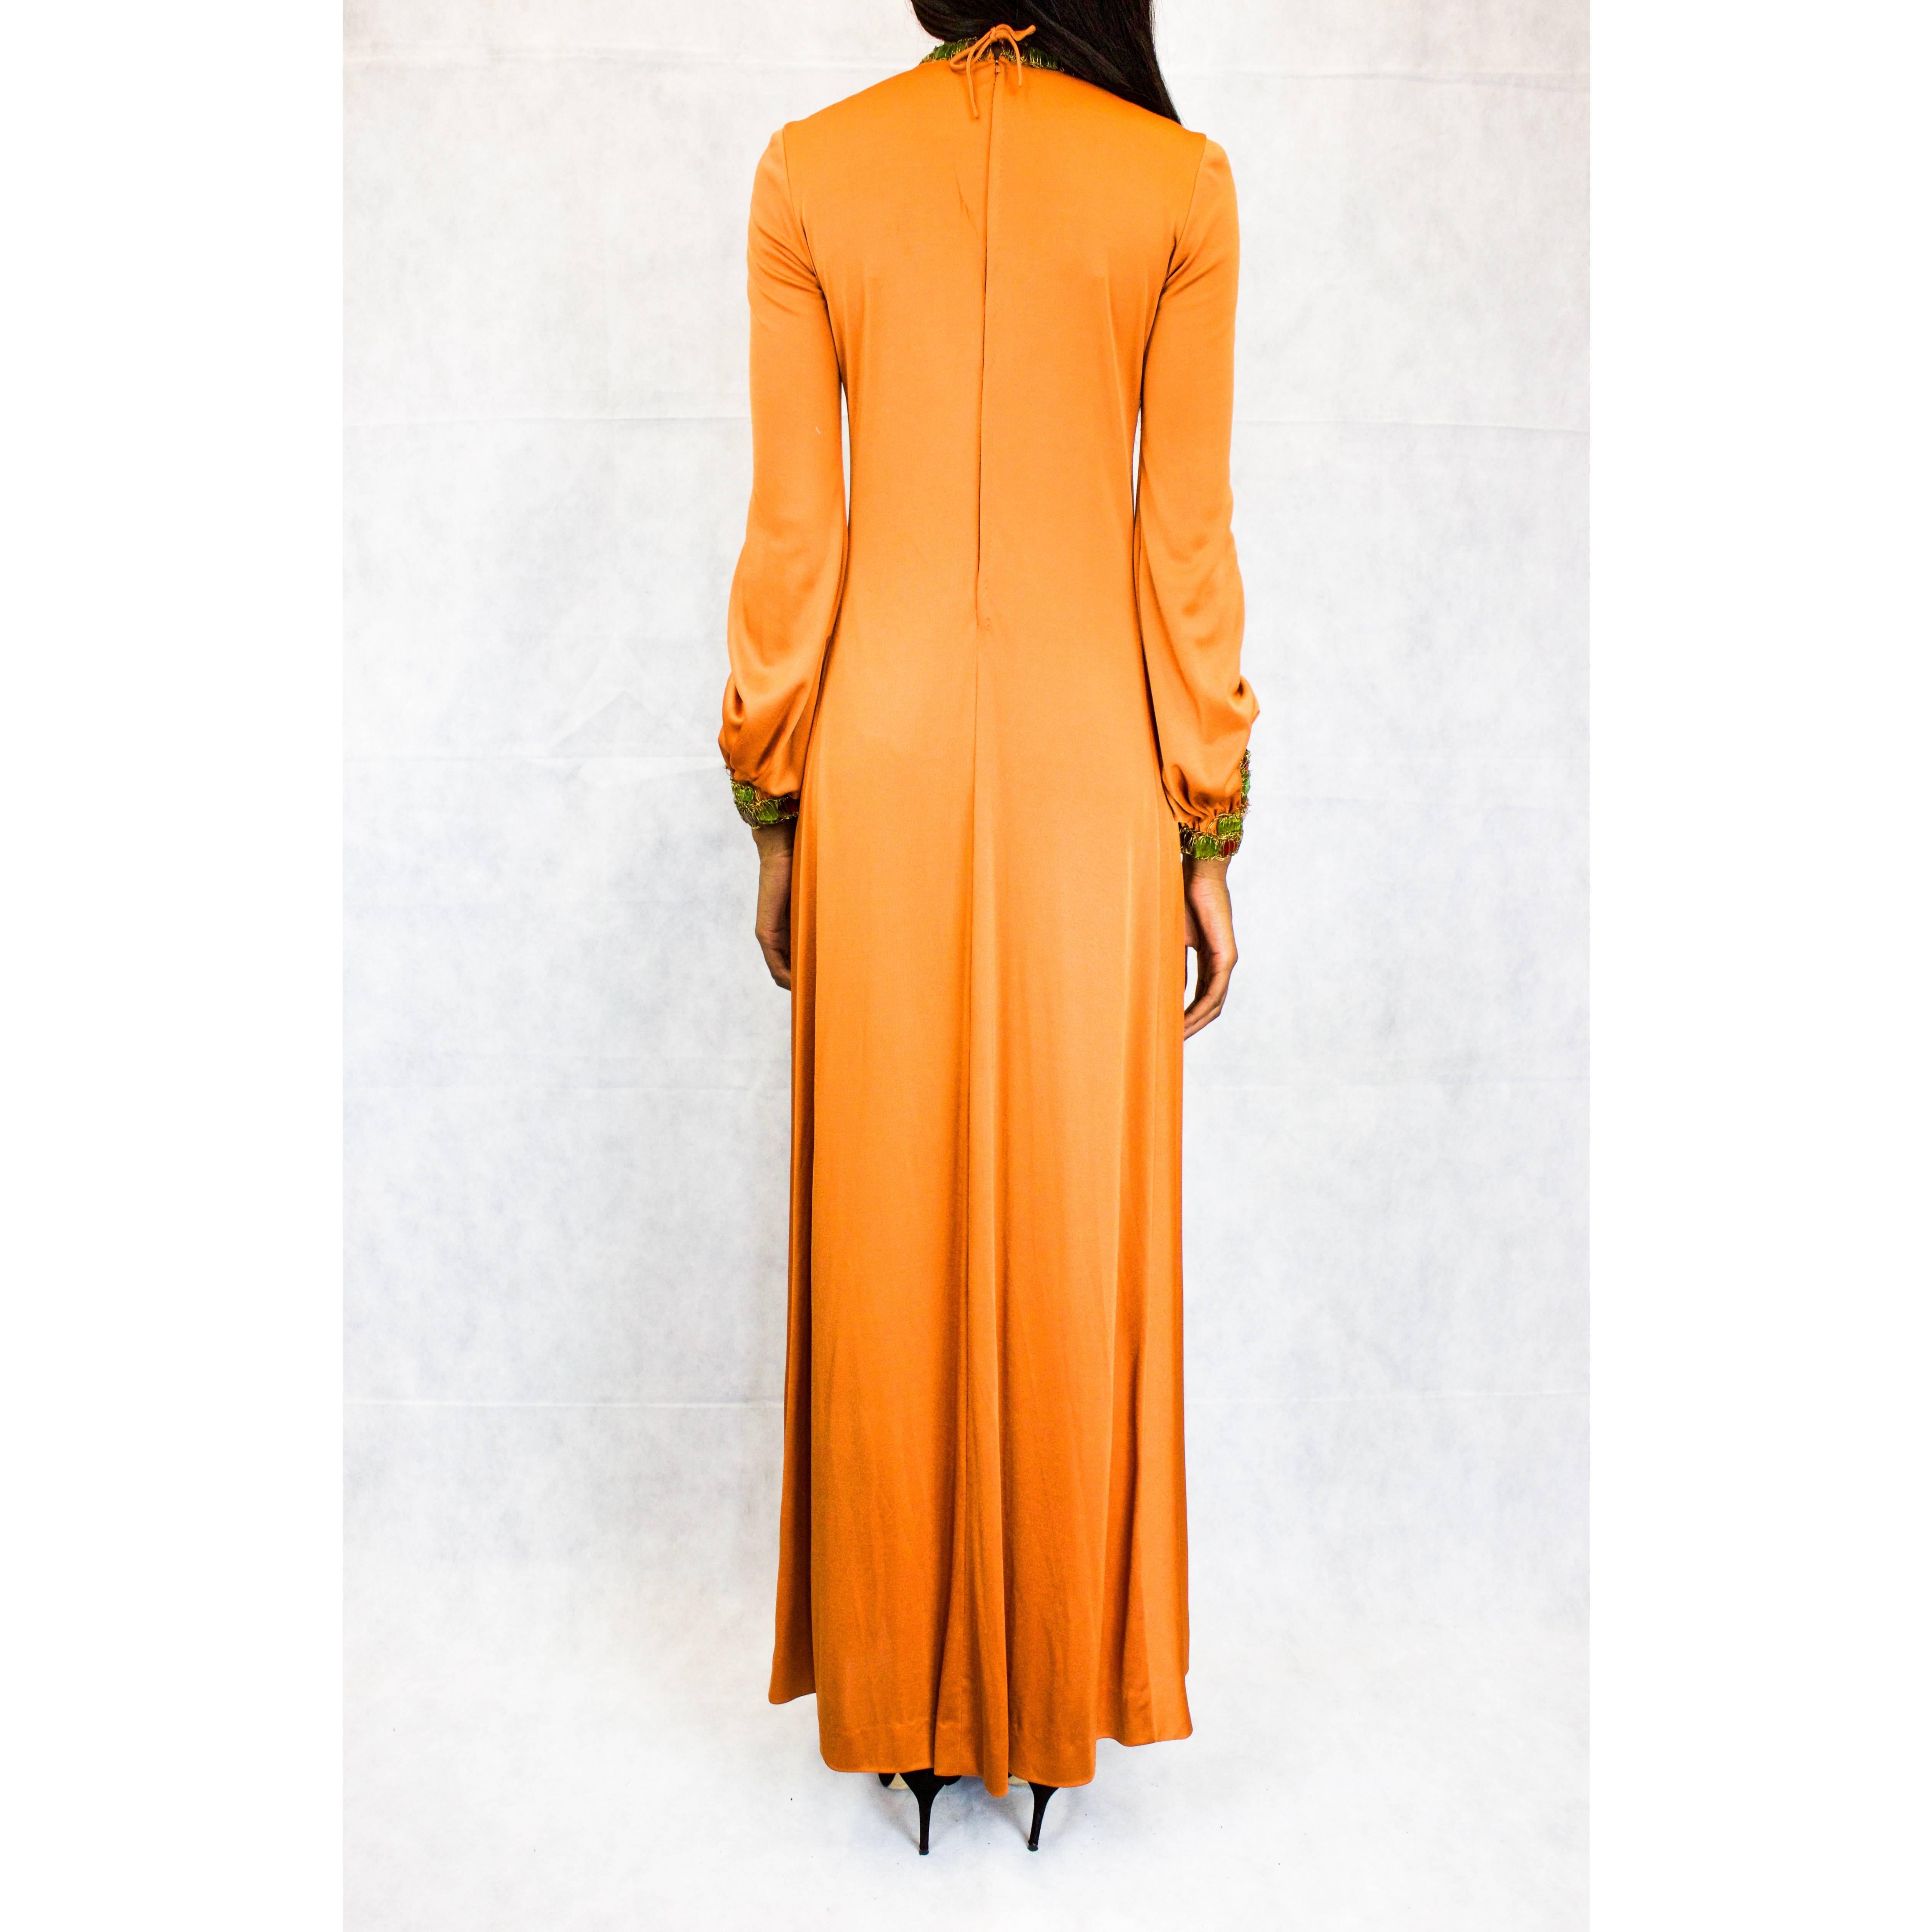 Orange Loris Azzaro bejewelled couture evening dress